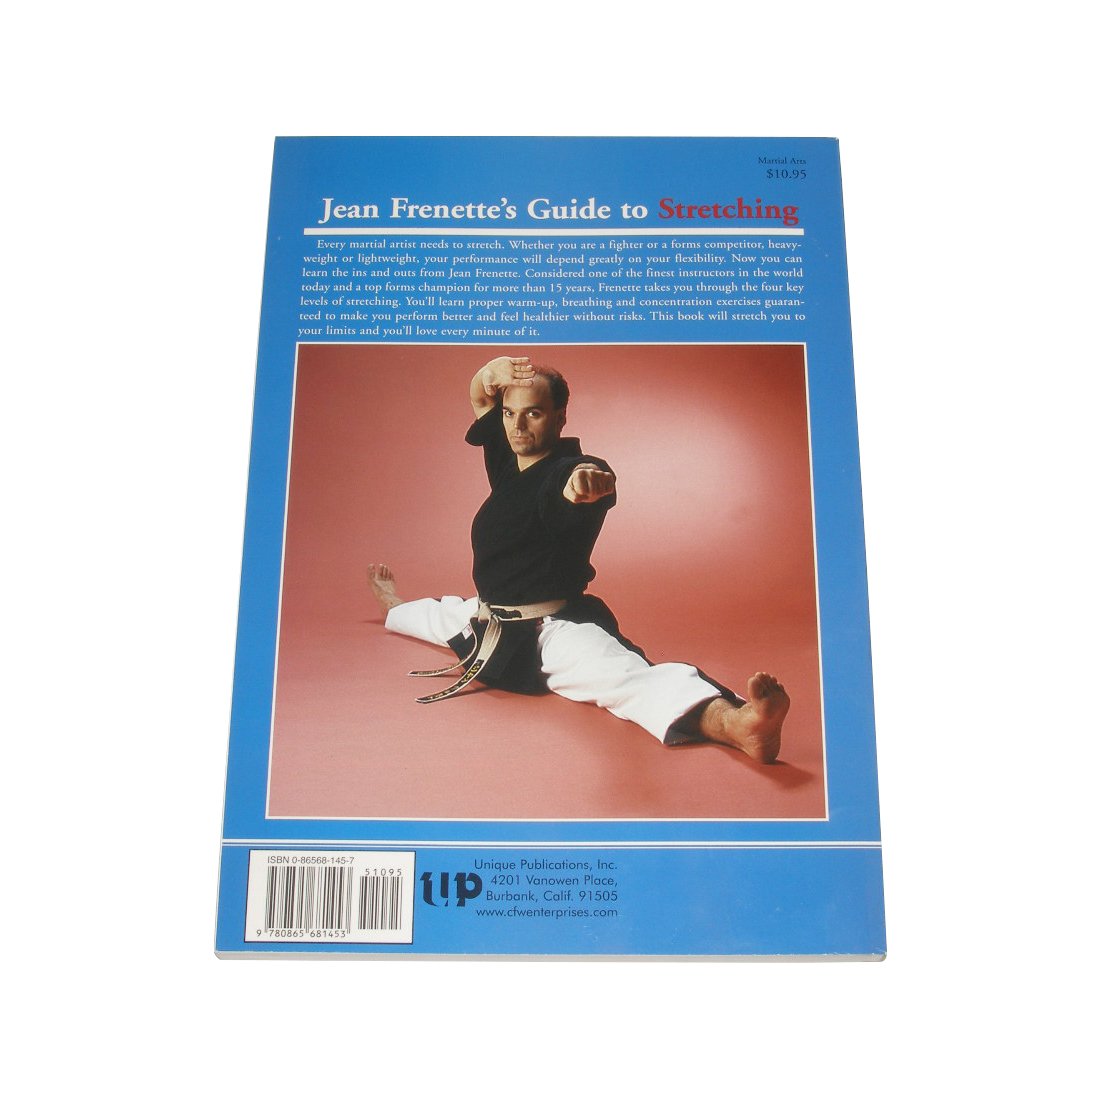 BU4200A-BD DIGITAL E-BOOK Jean Frenette's Complete Guide Stretching